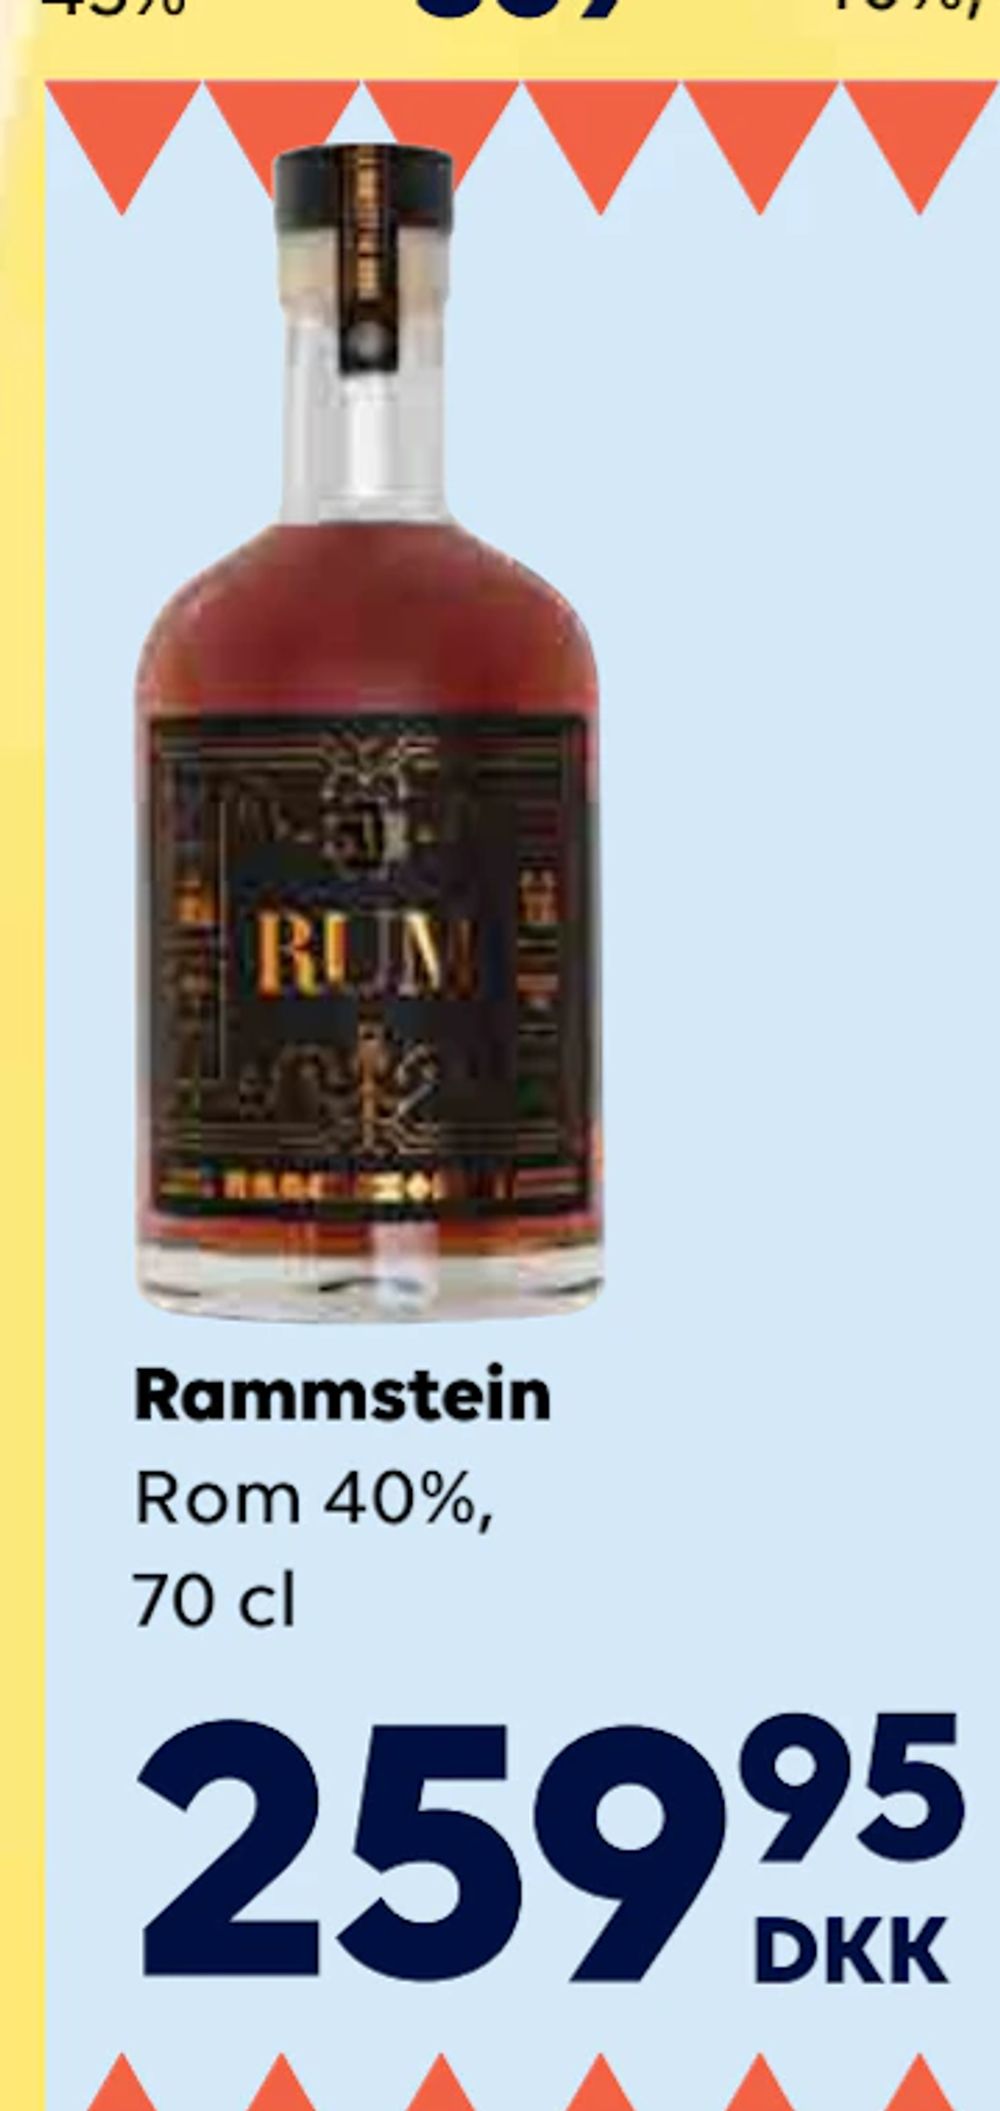 Tilbud på Rammstein fra BorderShop til 259,95 kr.